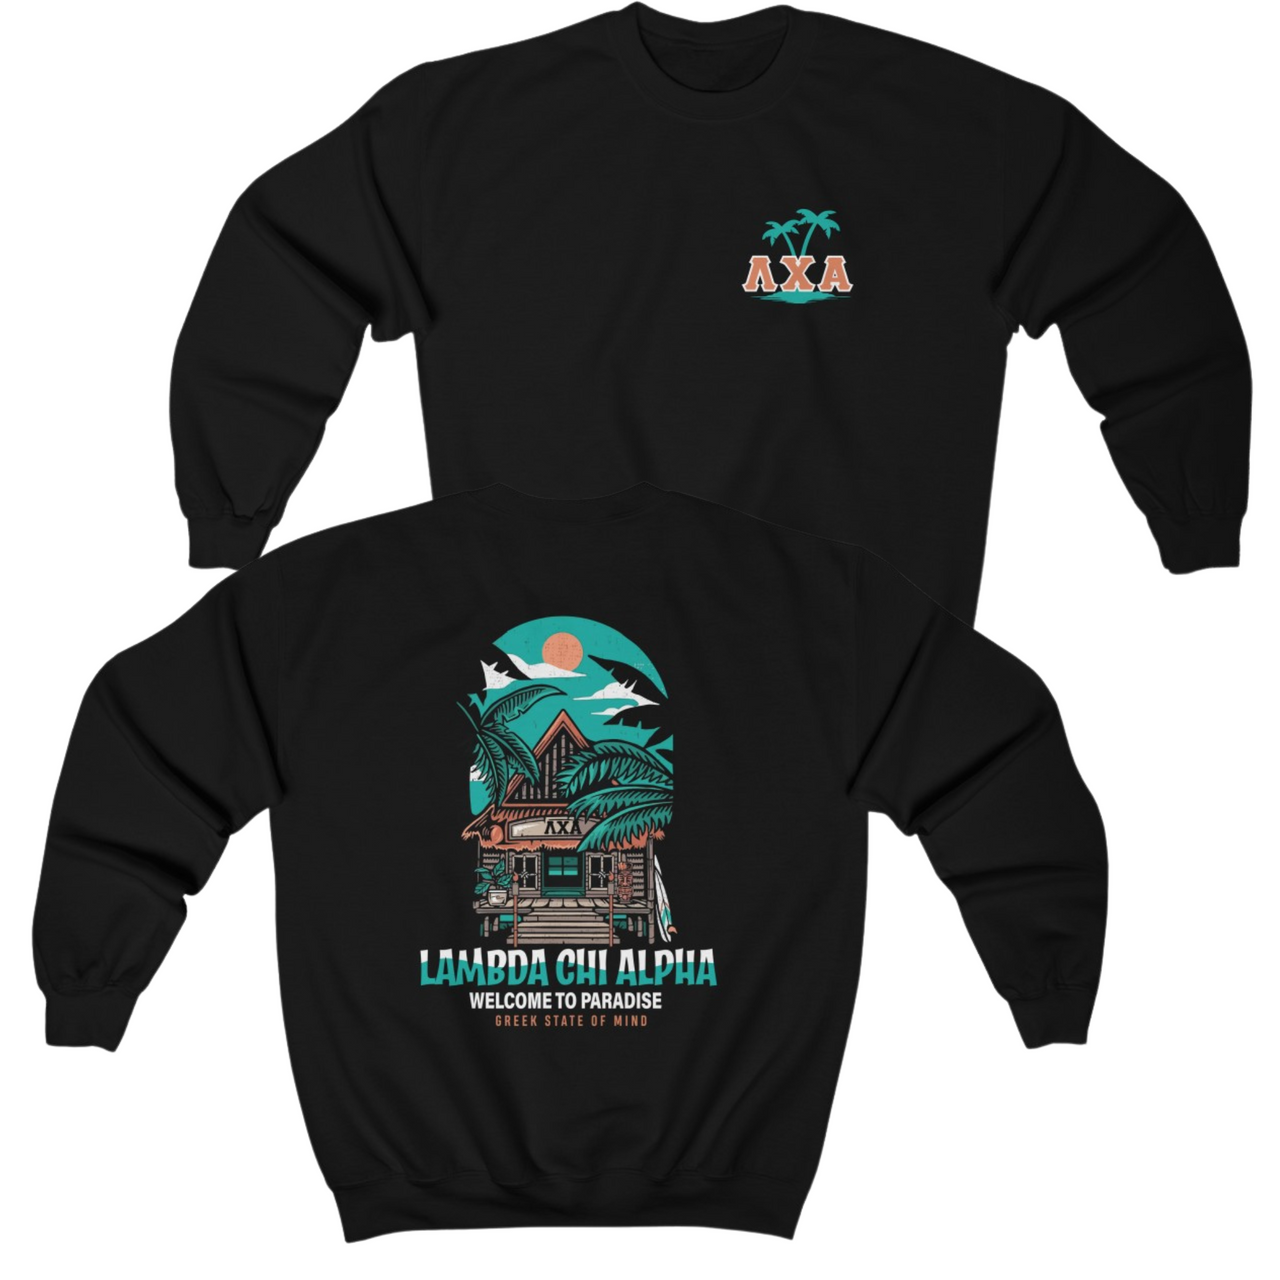 Black Lambda Chi Alpha Graphic Crewneck Sweatshirt | Welcome to Paradise | Lambda Chi Alpha Fraternity Shirt 